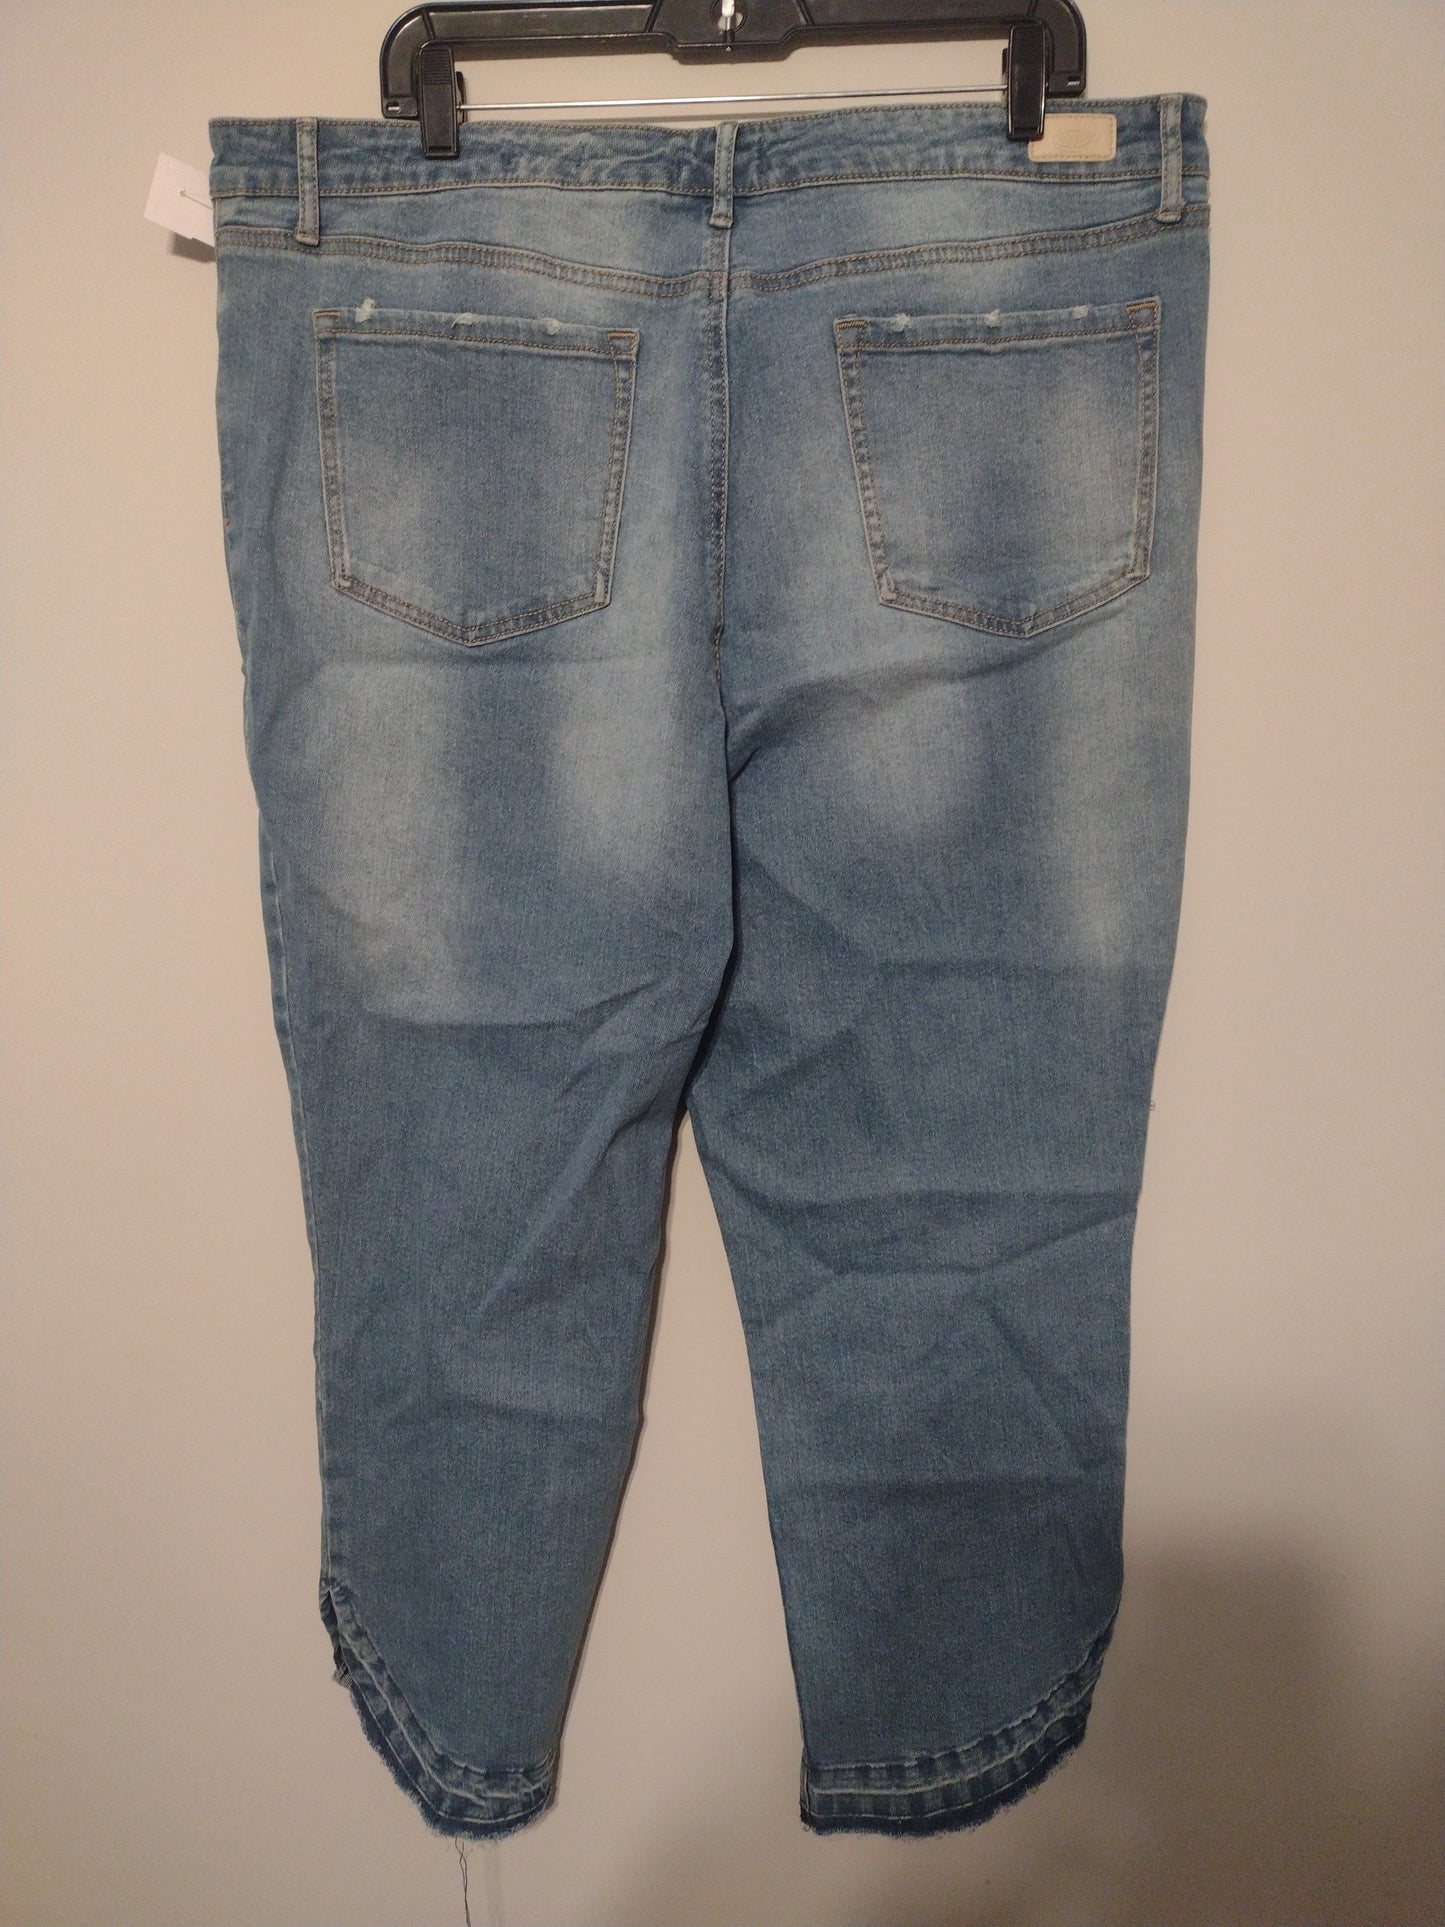 Jeans Skinny By Sofia By Sofia Vergara  Size: 1x